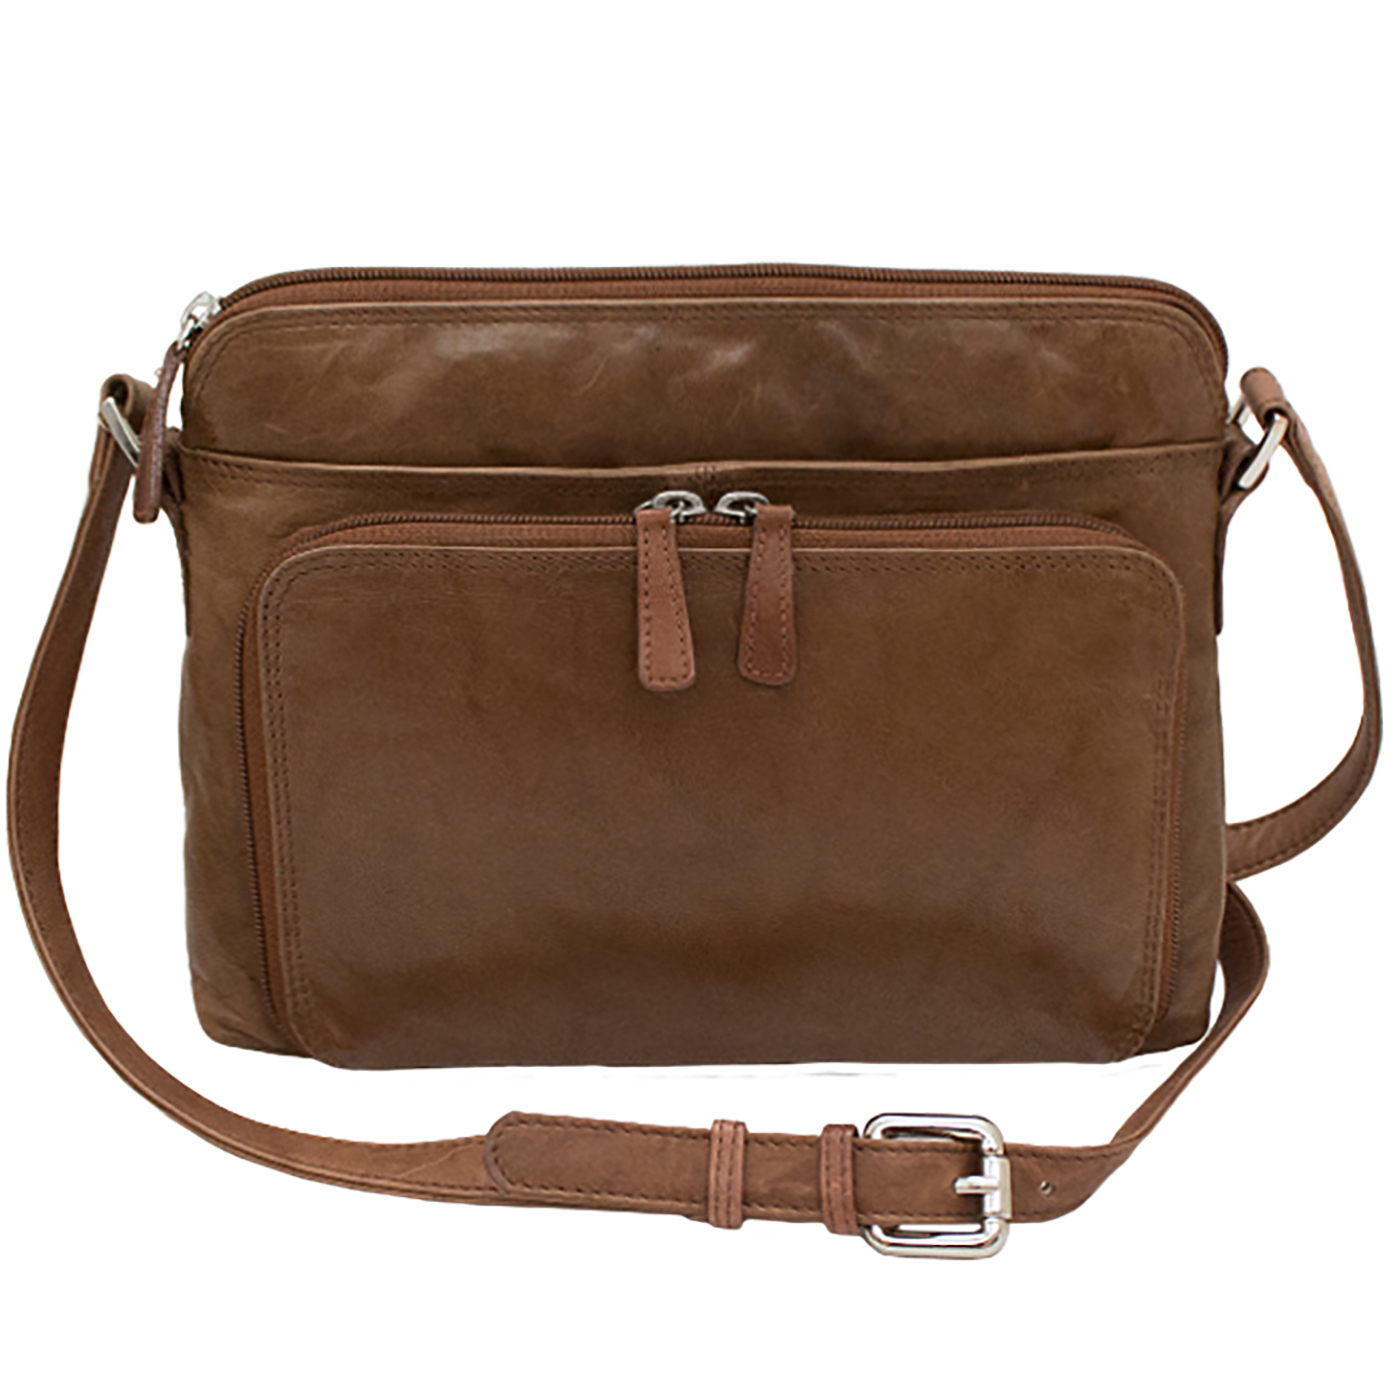 ILI 6333 Leather Shoulder Handbag